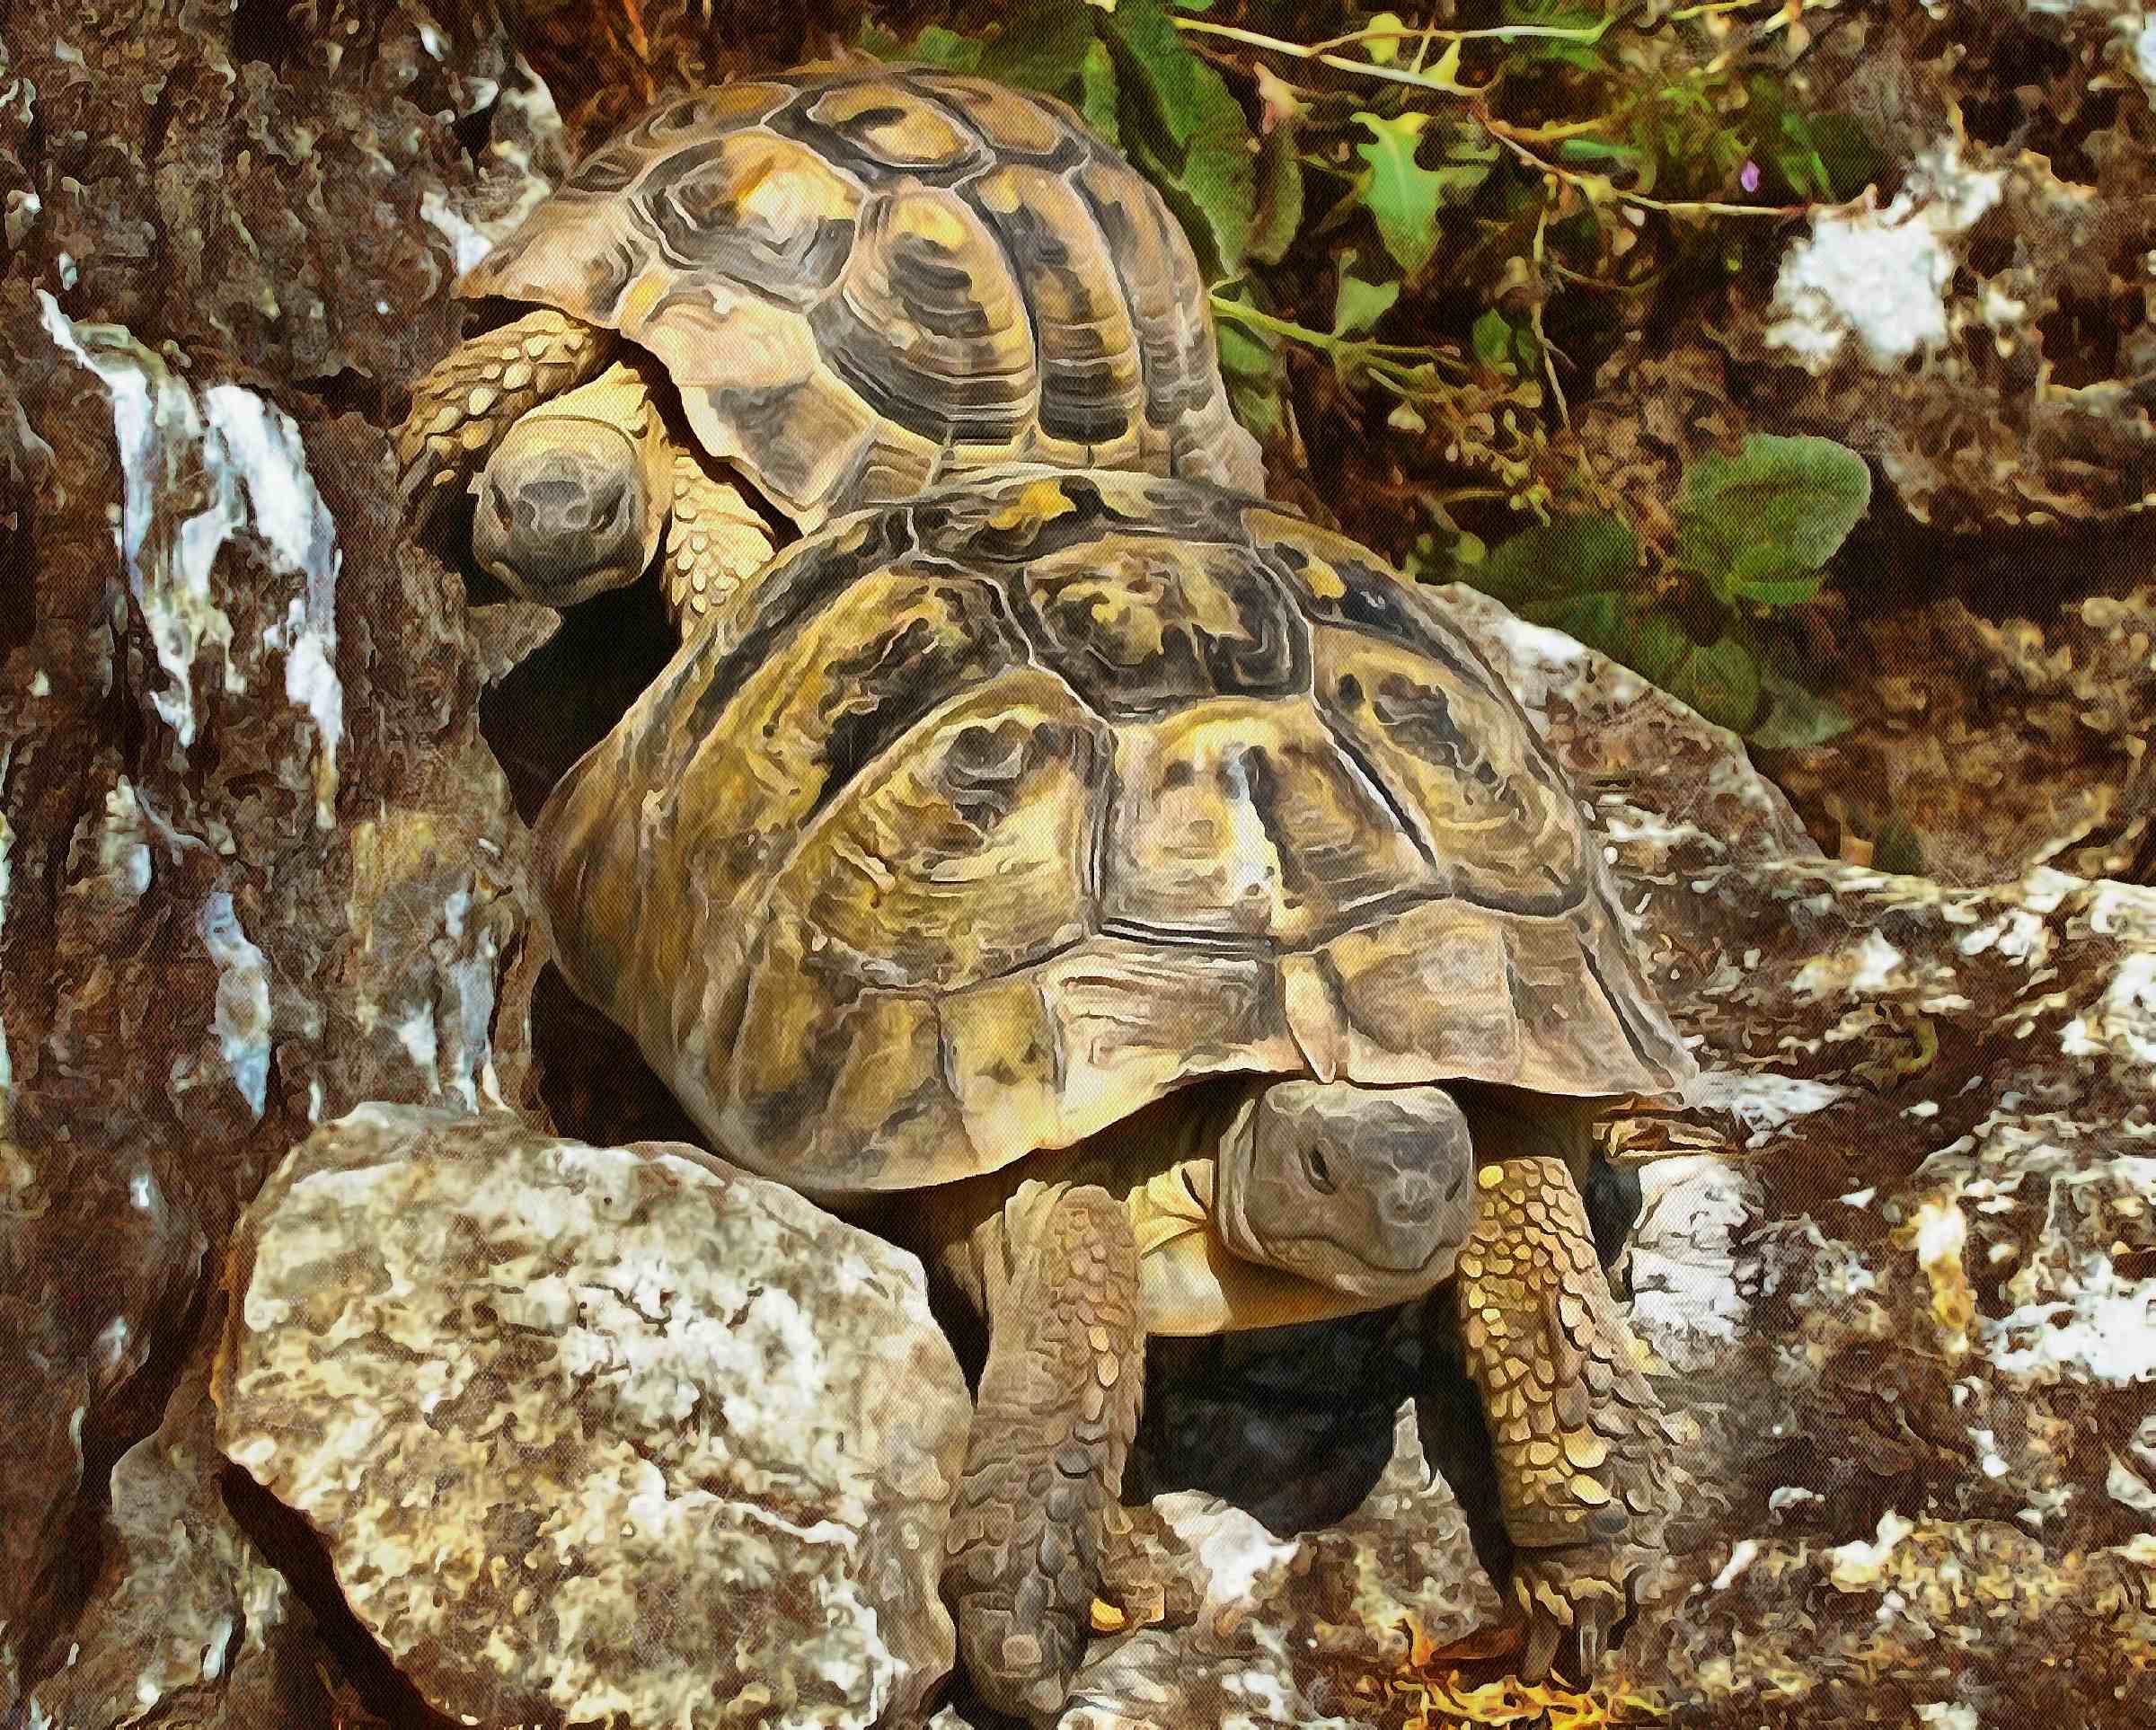 Free Tortoise images, - free images turtles, tortoise public domain images,...